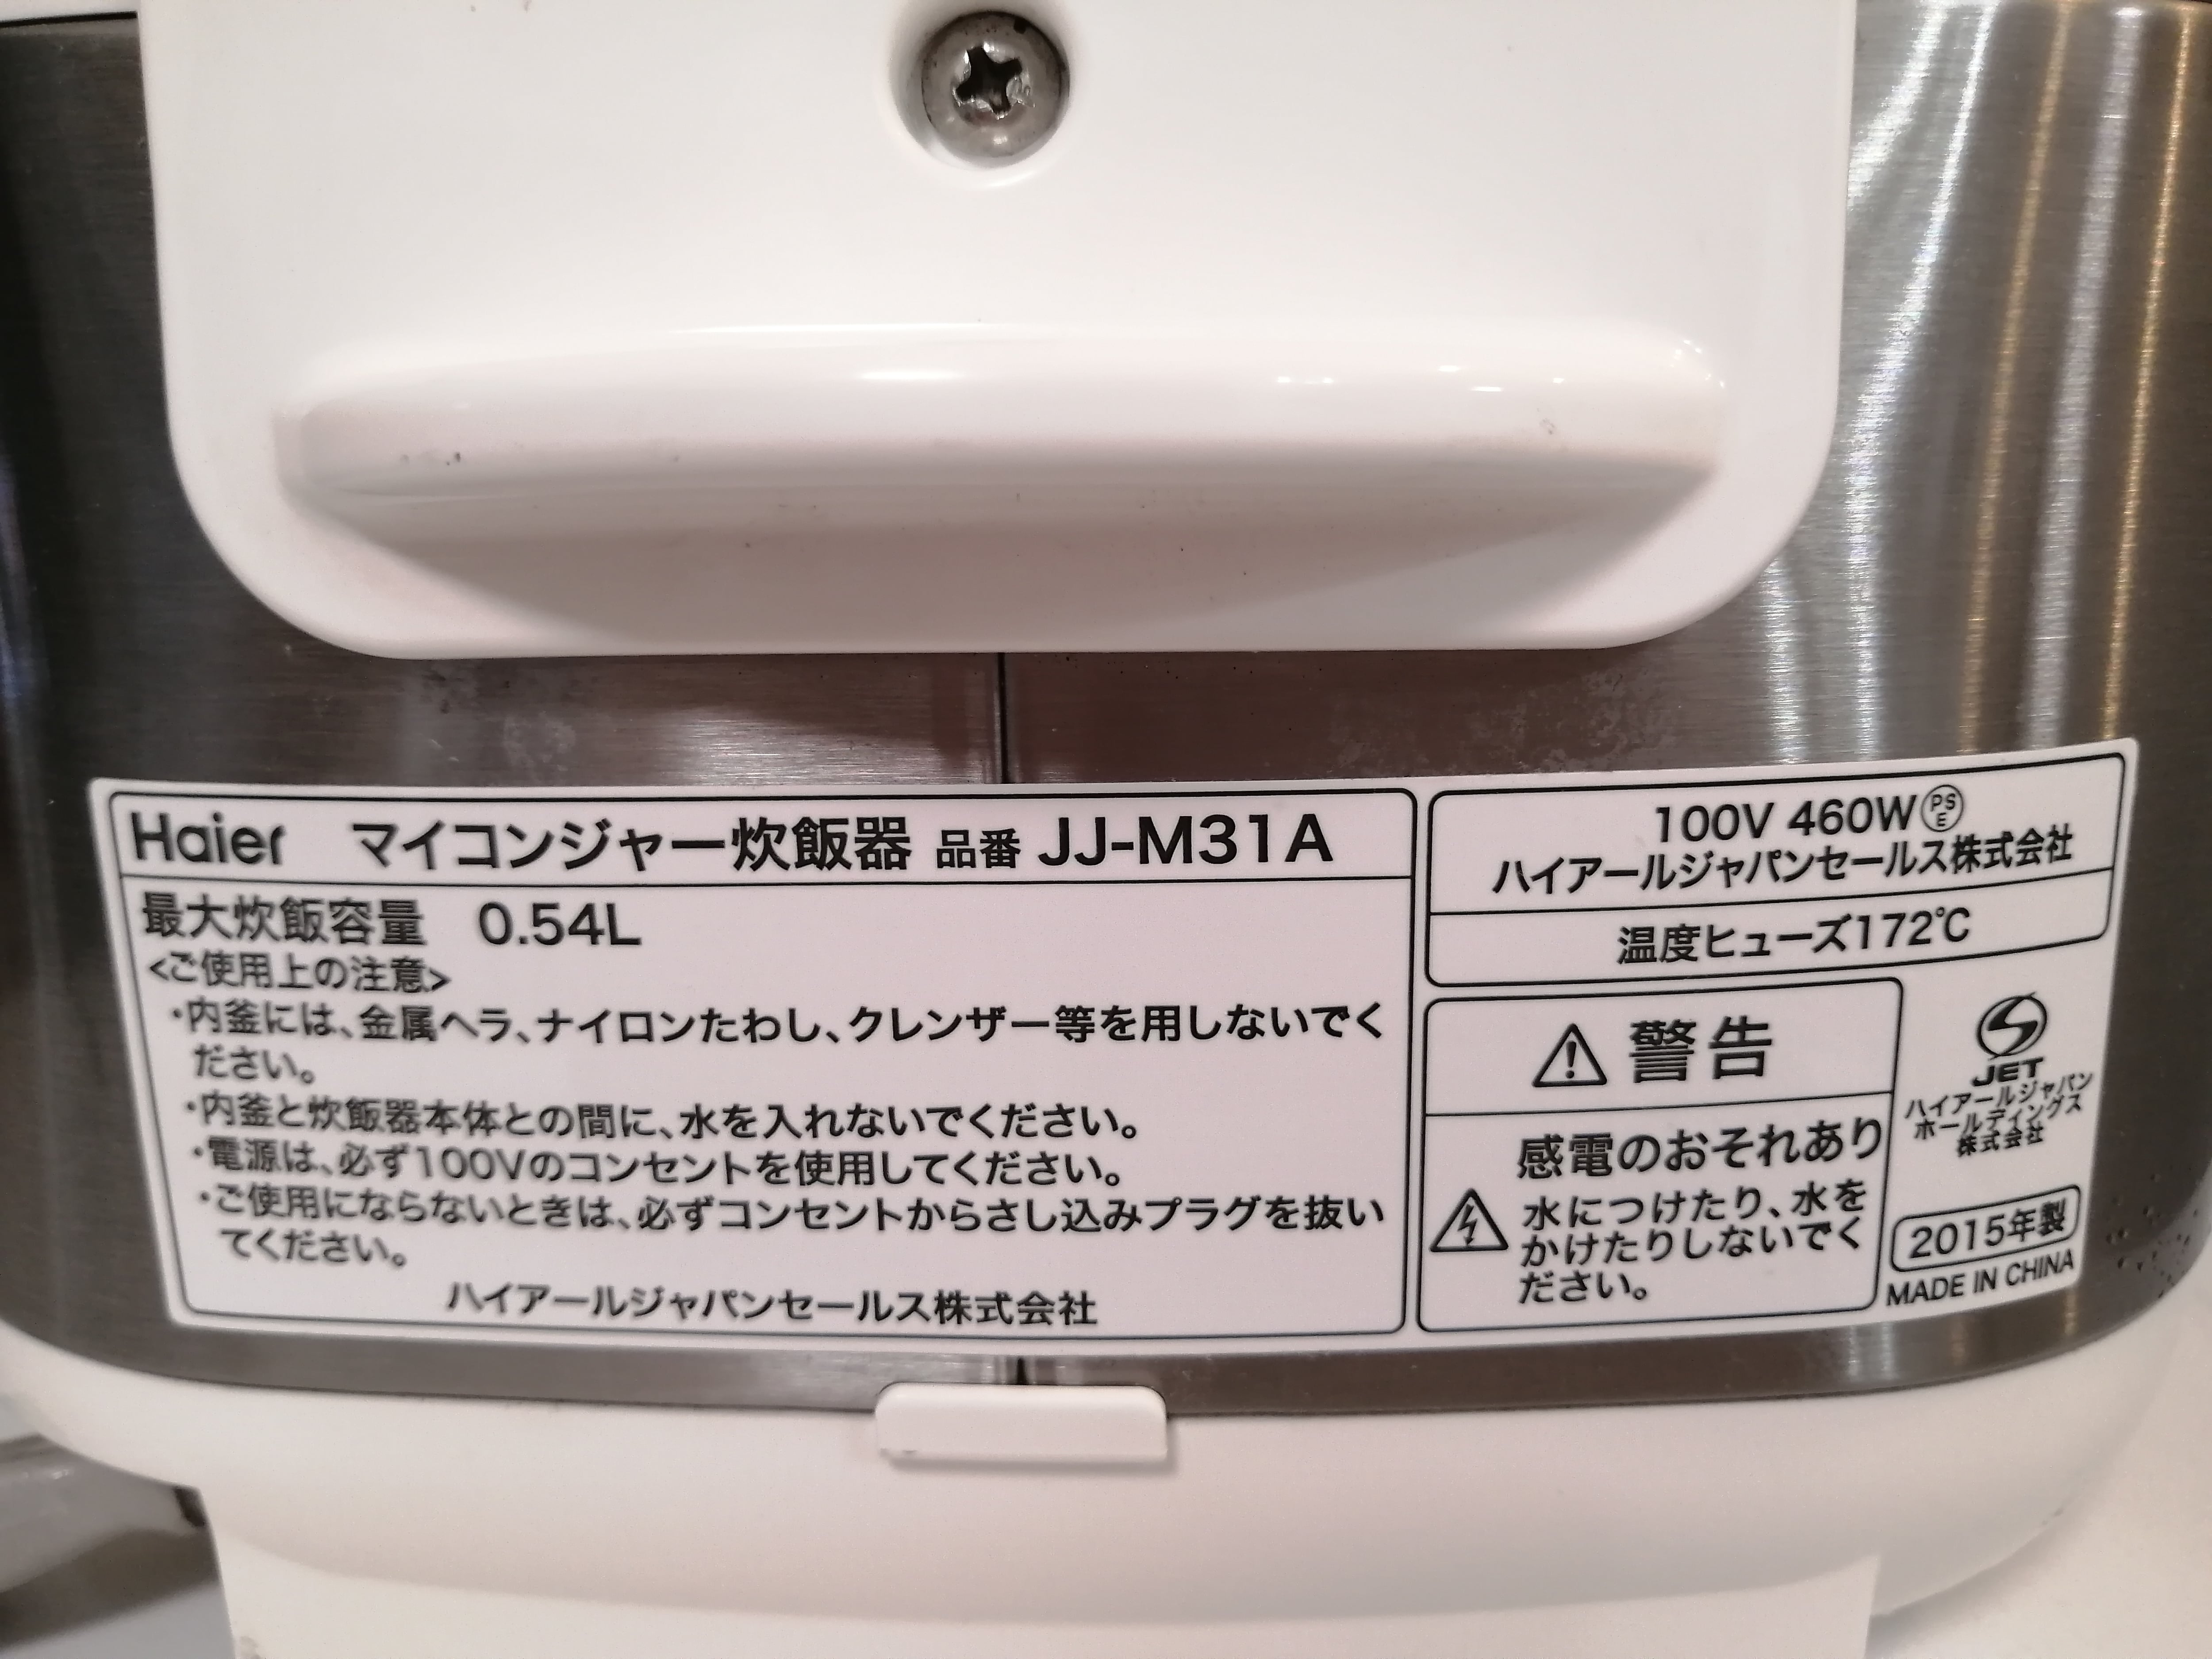 Haier 3合炊飯器 2015年 JJ-M31A | 中村区亀島リサイクルショップ ハラダワークス